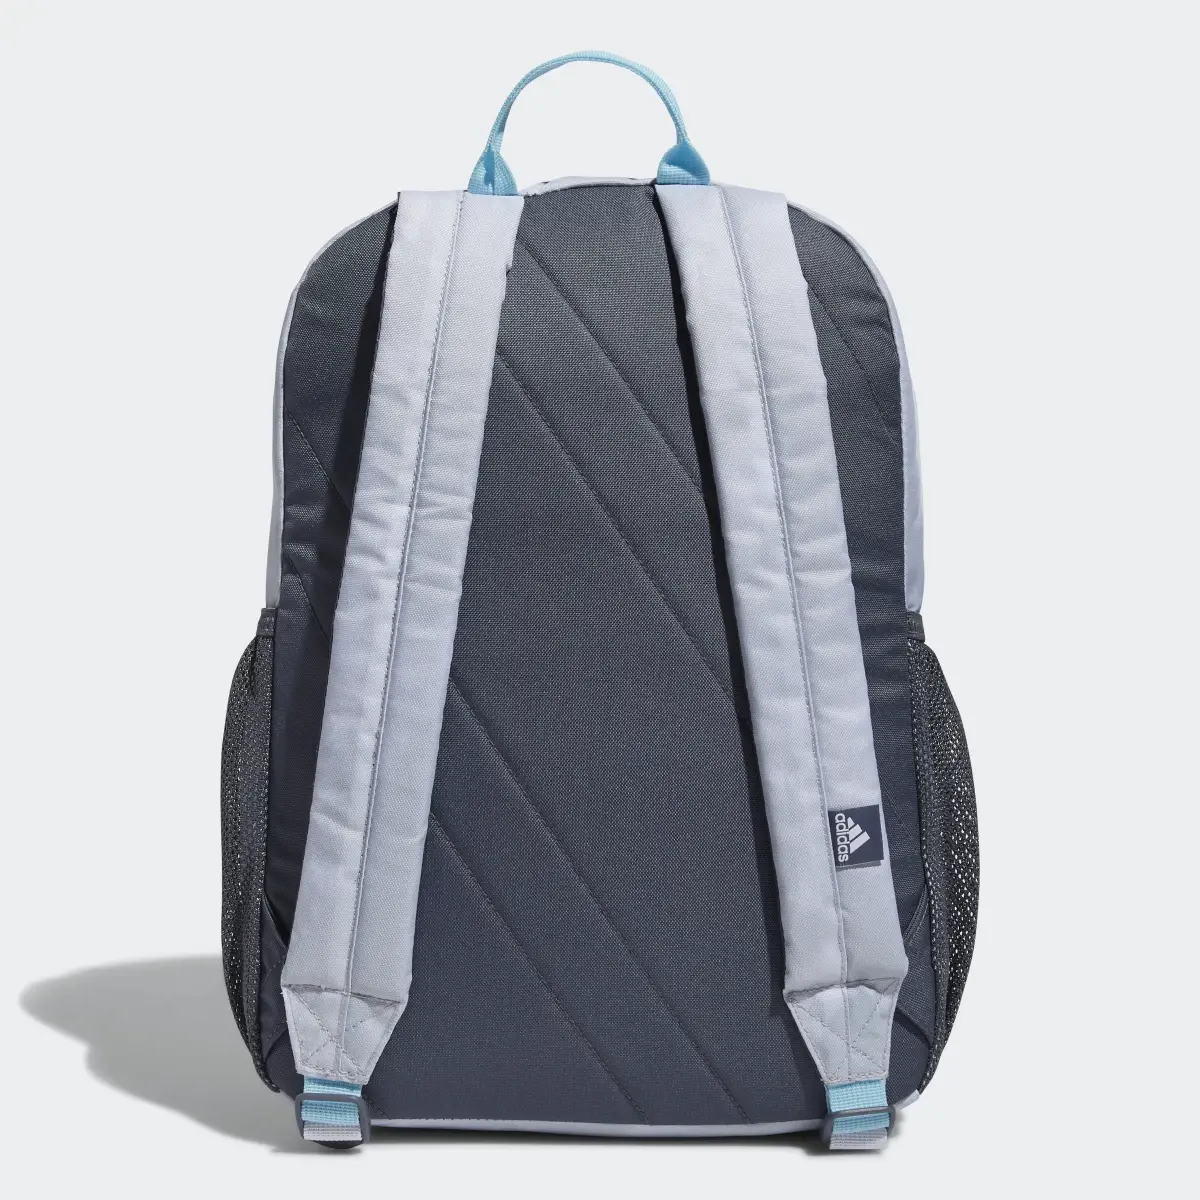 Adidas Ready Backpack. 3